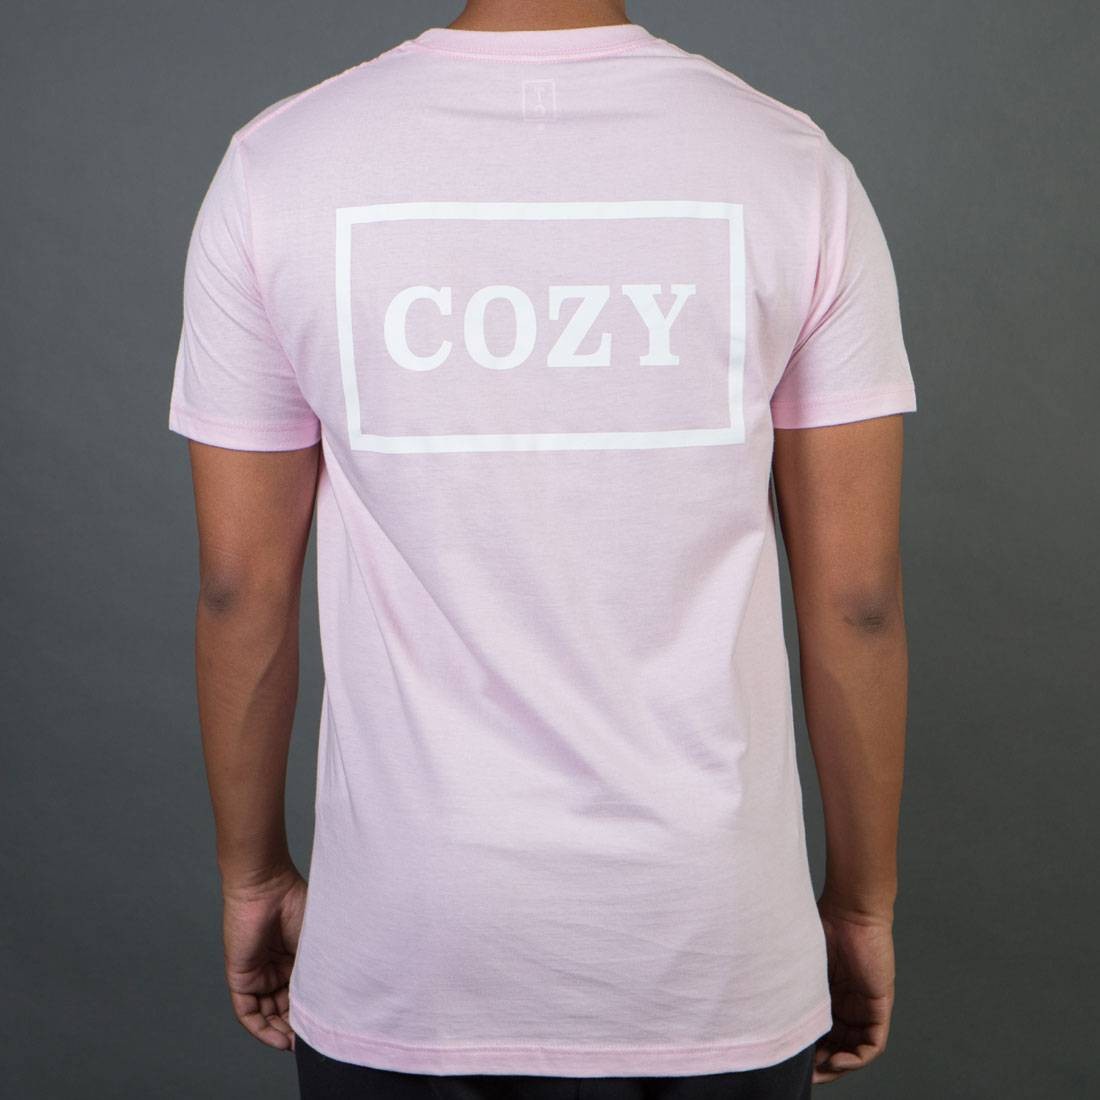 Team Cozy Men Cozy Box Tee (pink)